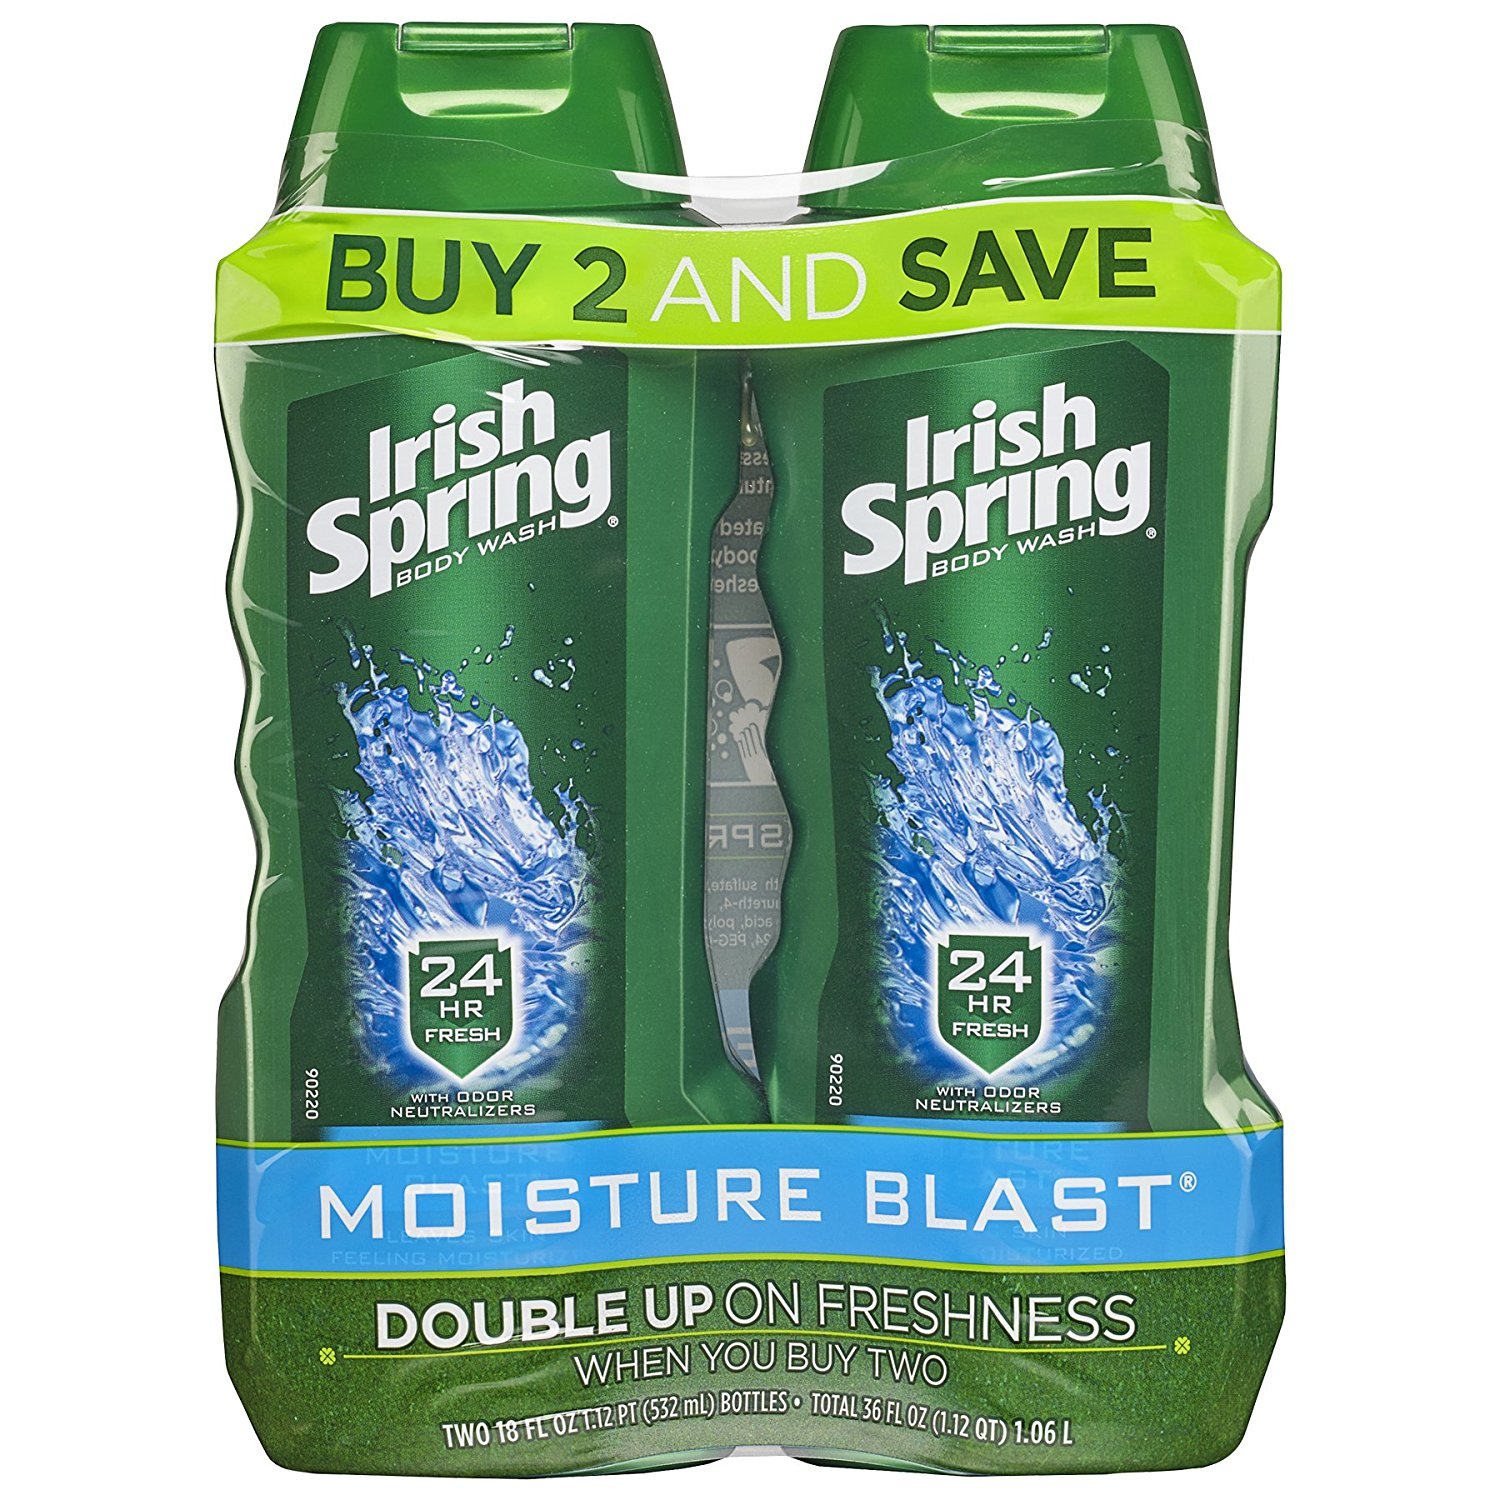 Irish Spring Moisture Blast Moisturizing Body Wash 2 Pack Only $4.65 Shipped!